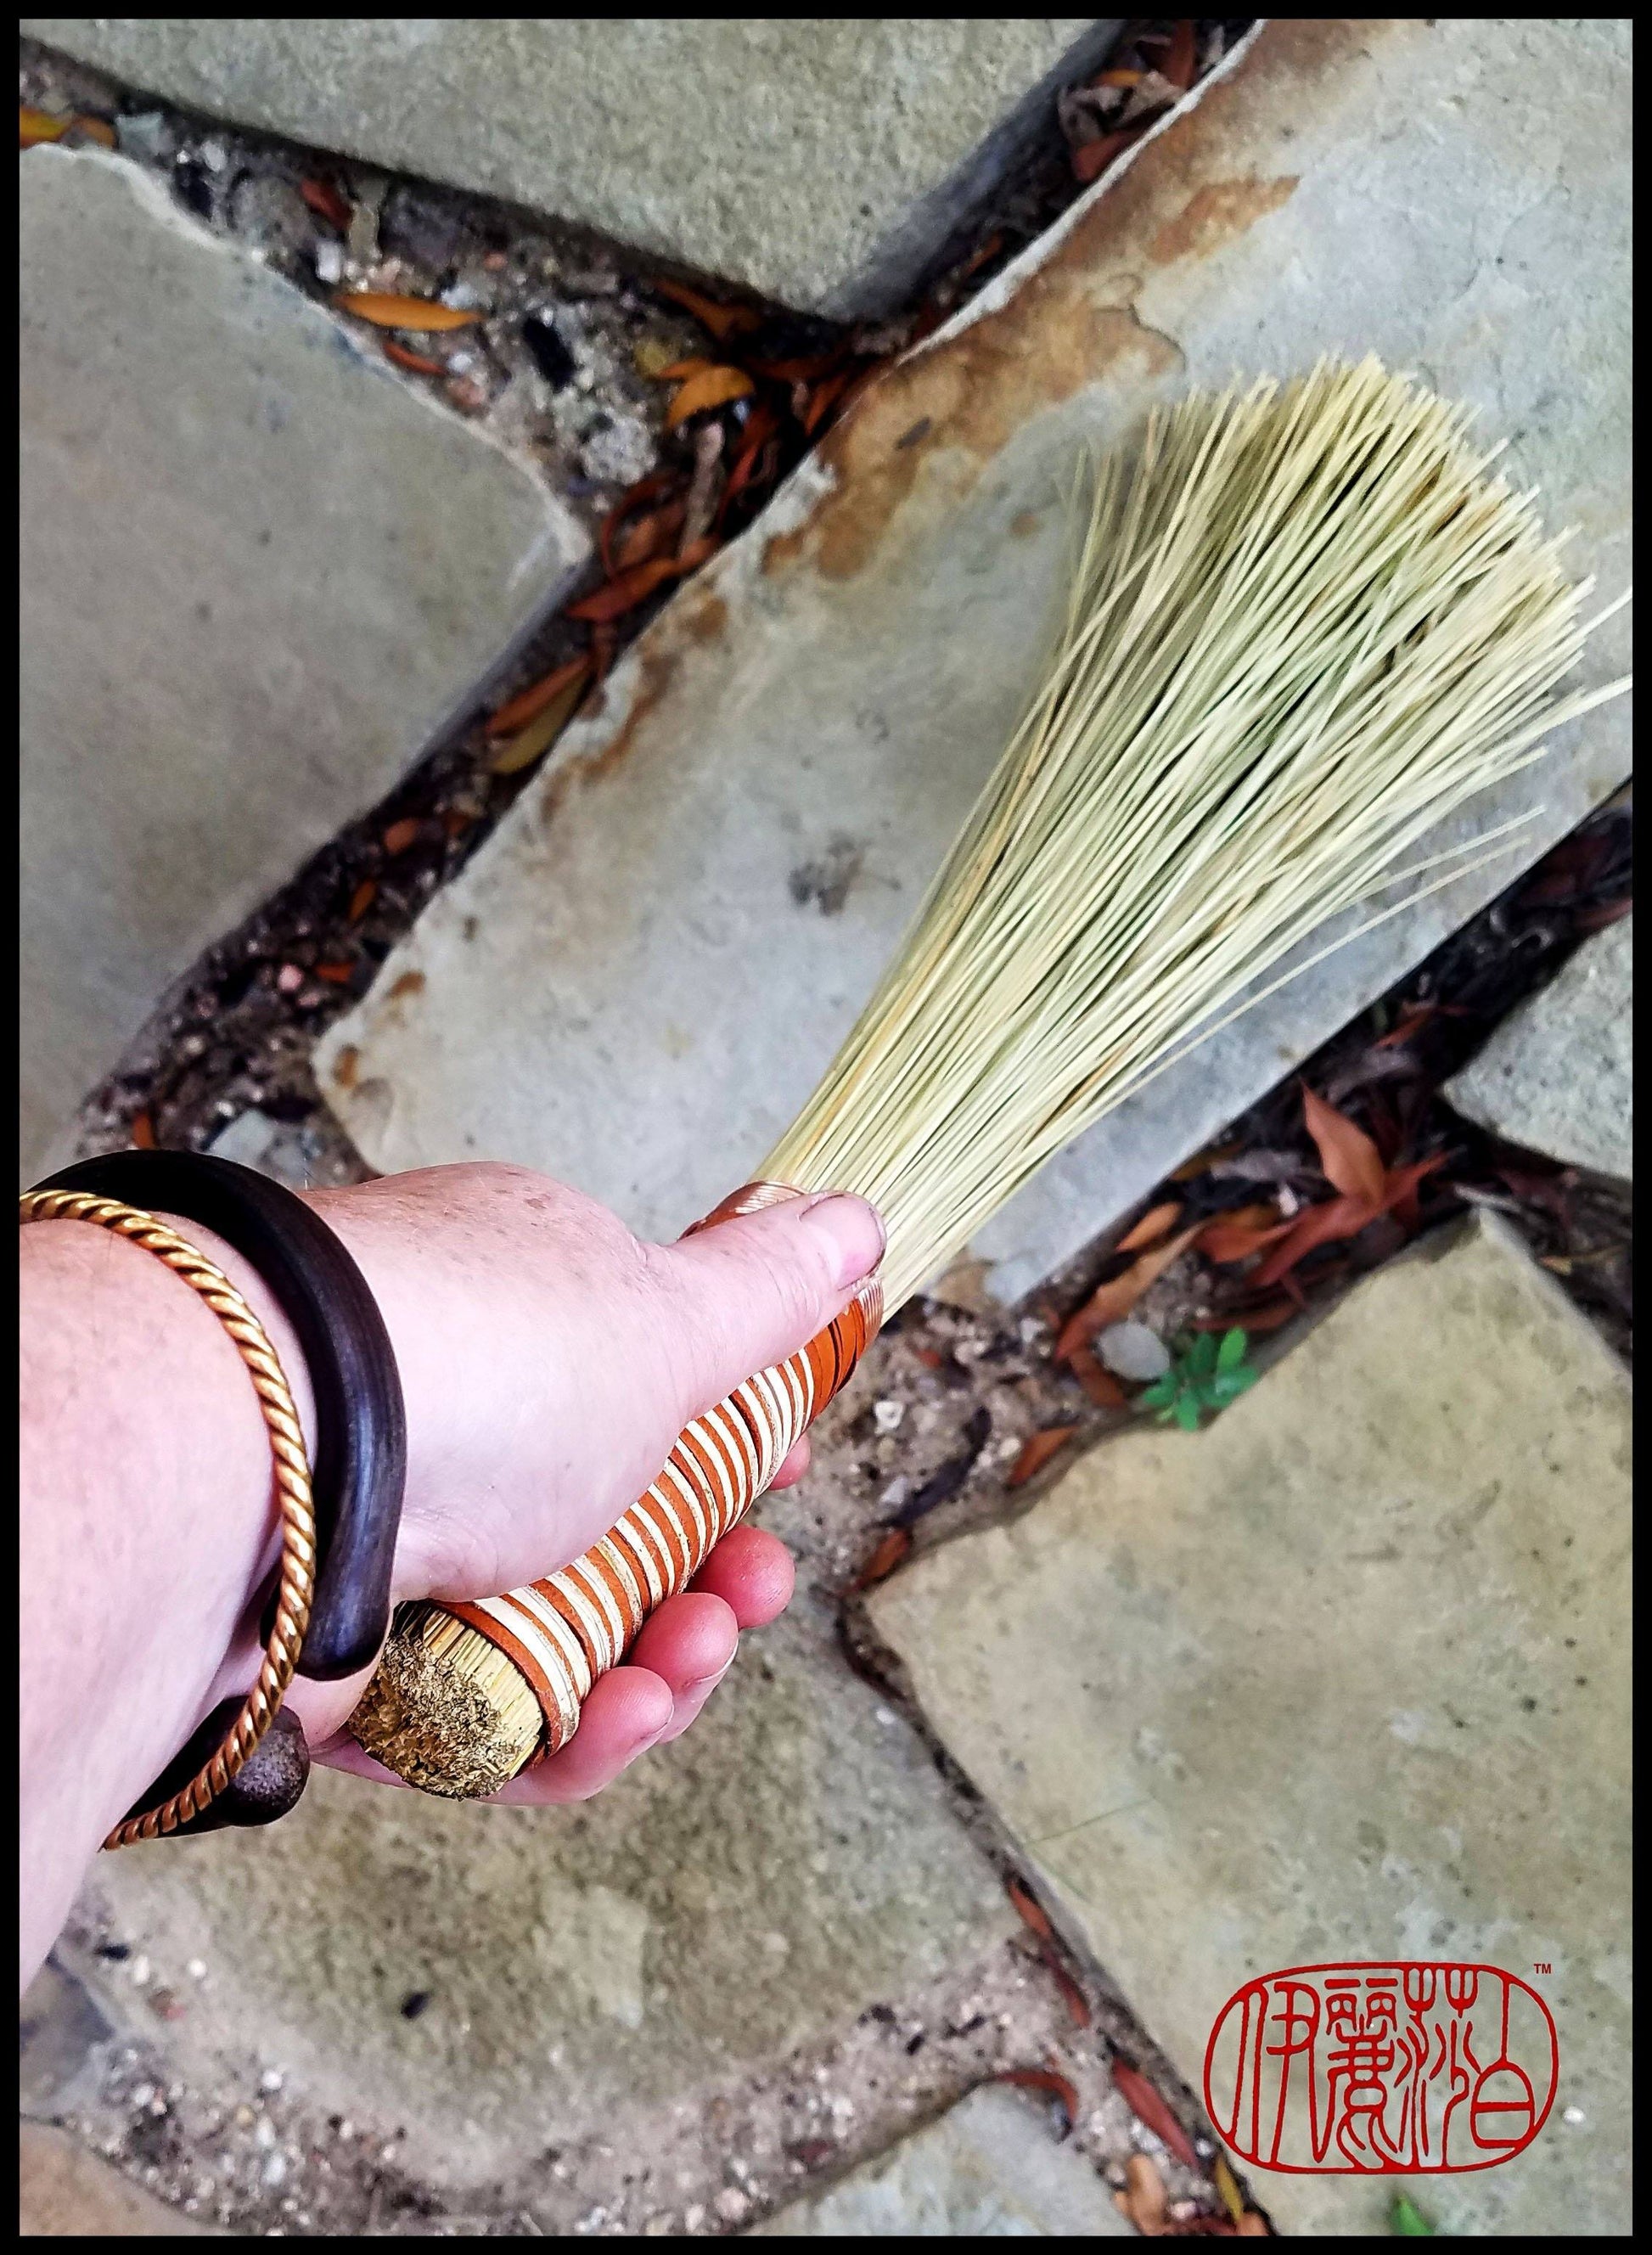 Handmade African Broom Fiber (18 Inches Long Total) Paint Brush - Elizabeth Schowachert Art